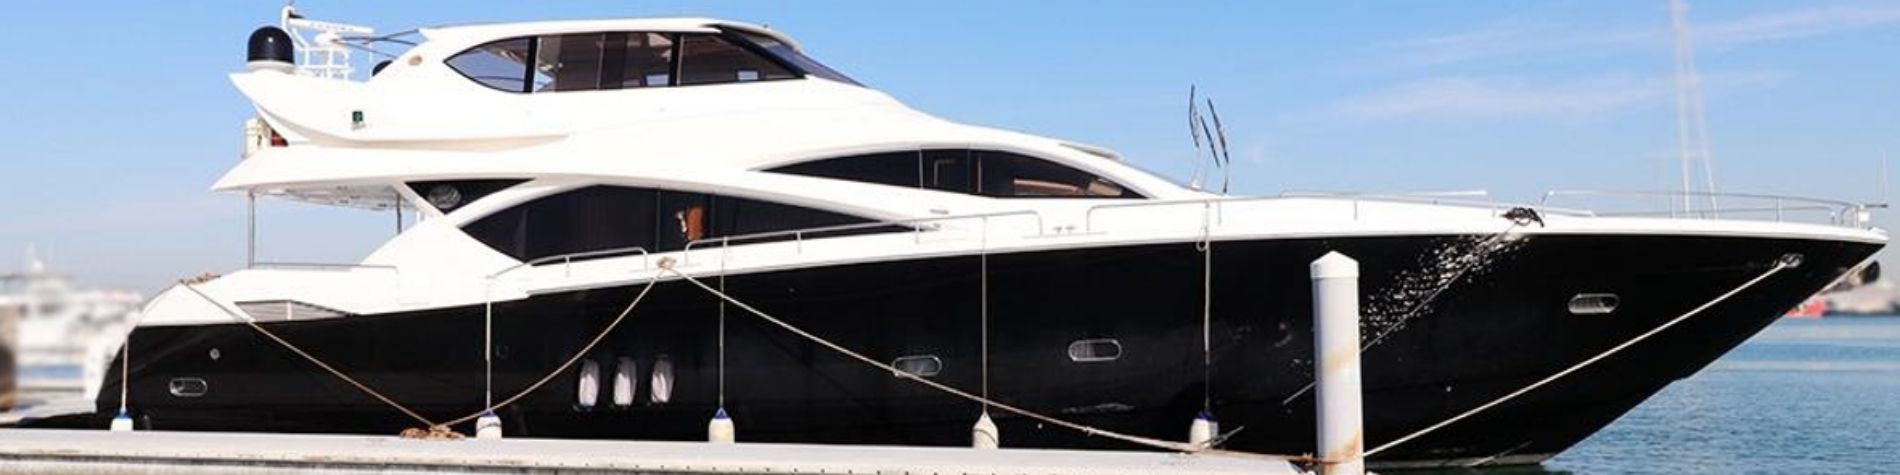 Sun Seeker 90 FT Yacht Rental in Dubai